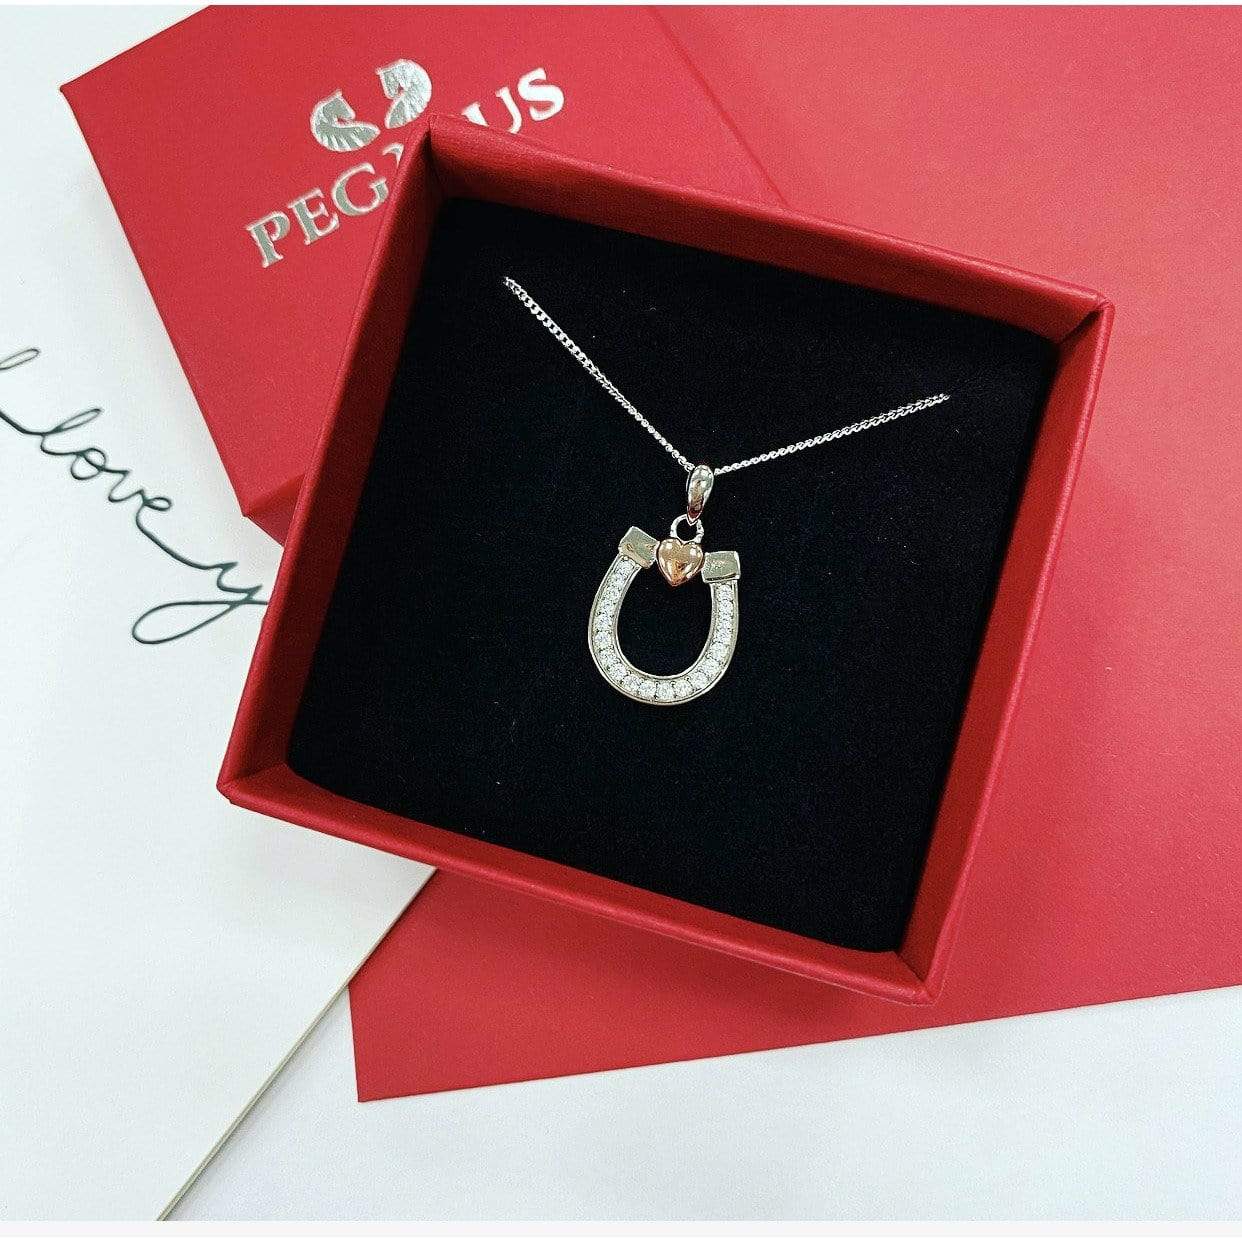 PEGASUS JEWELLERY Necklaces Horseshoe Heart Pendant- Limited Edition